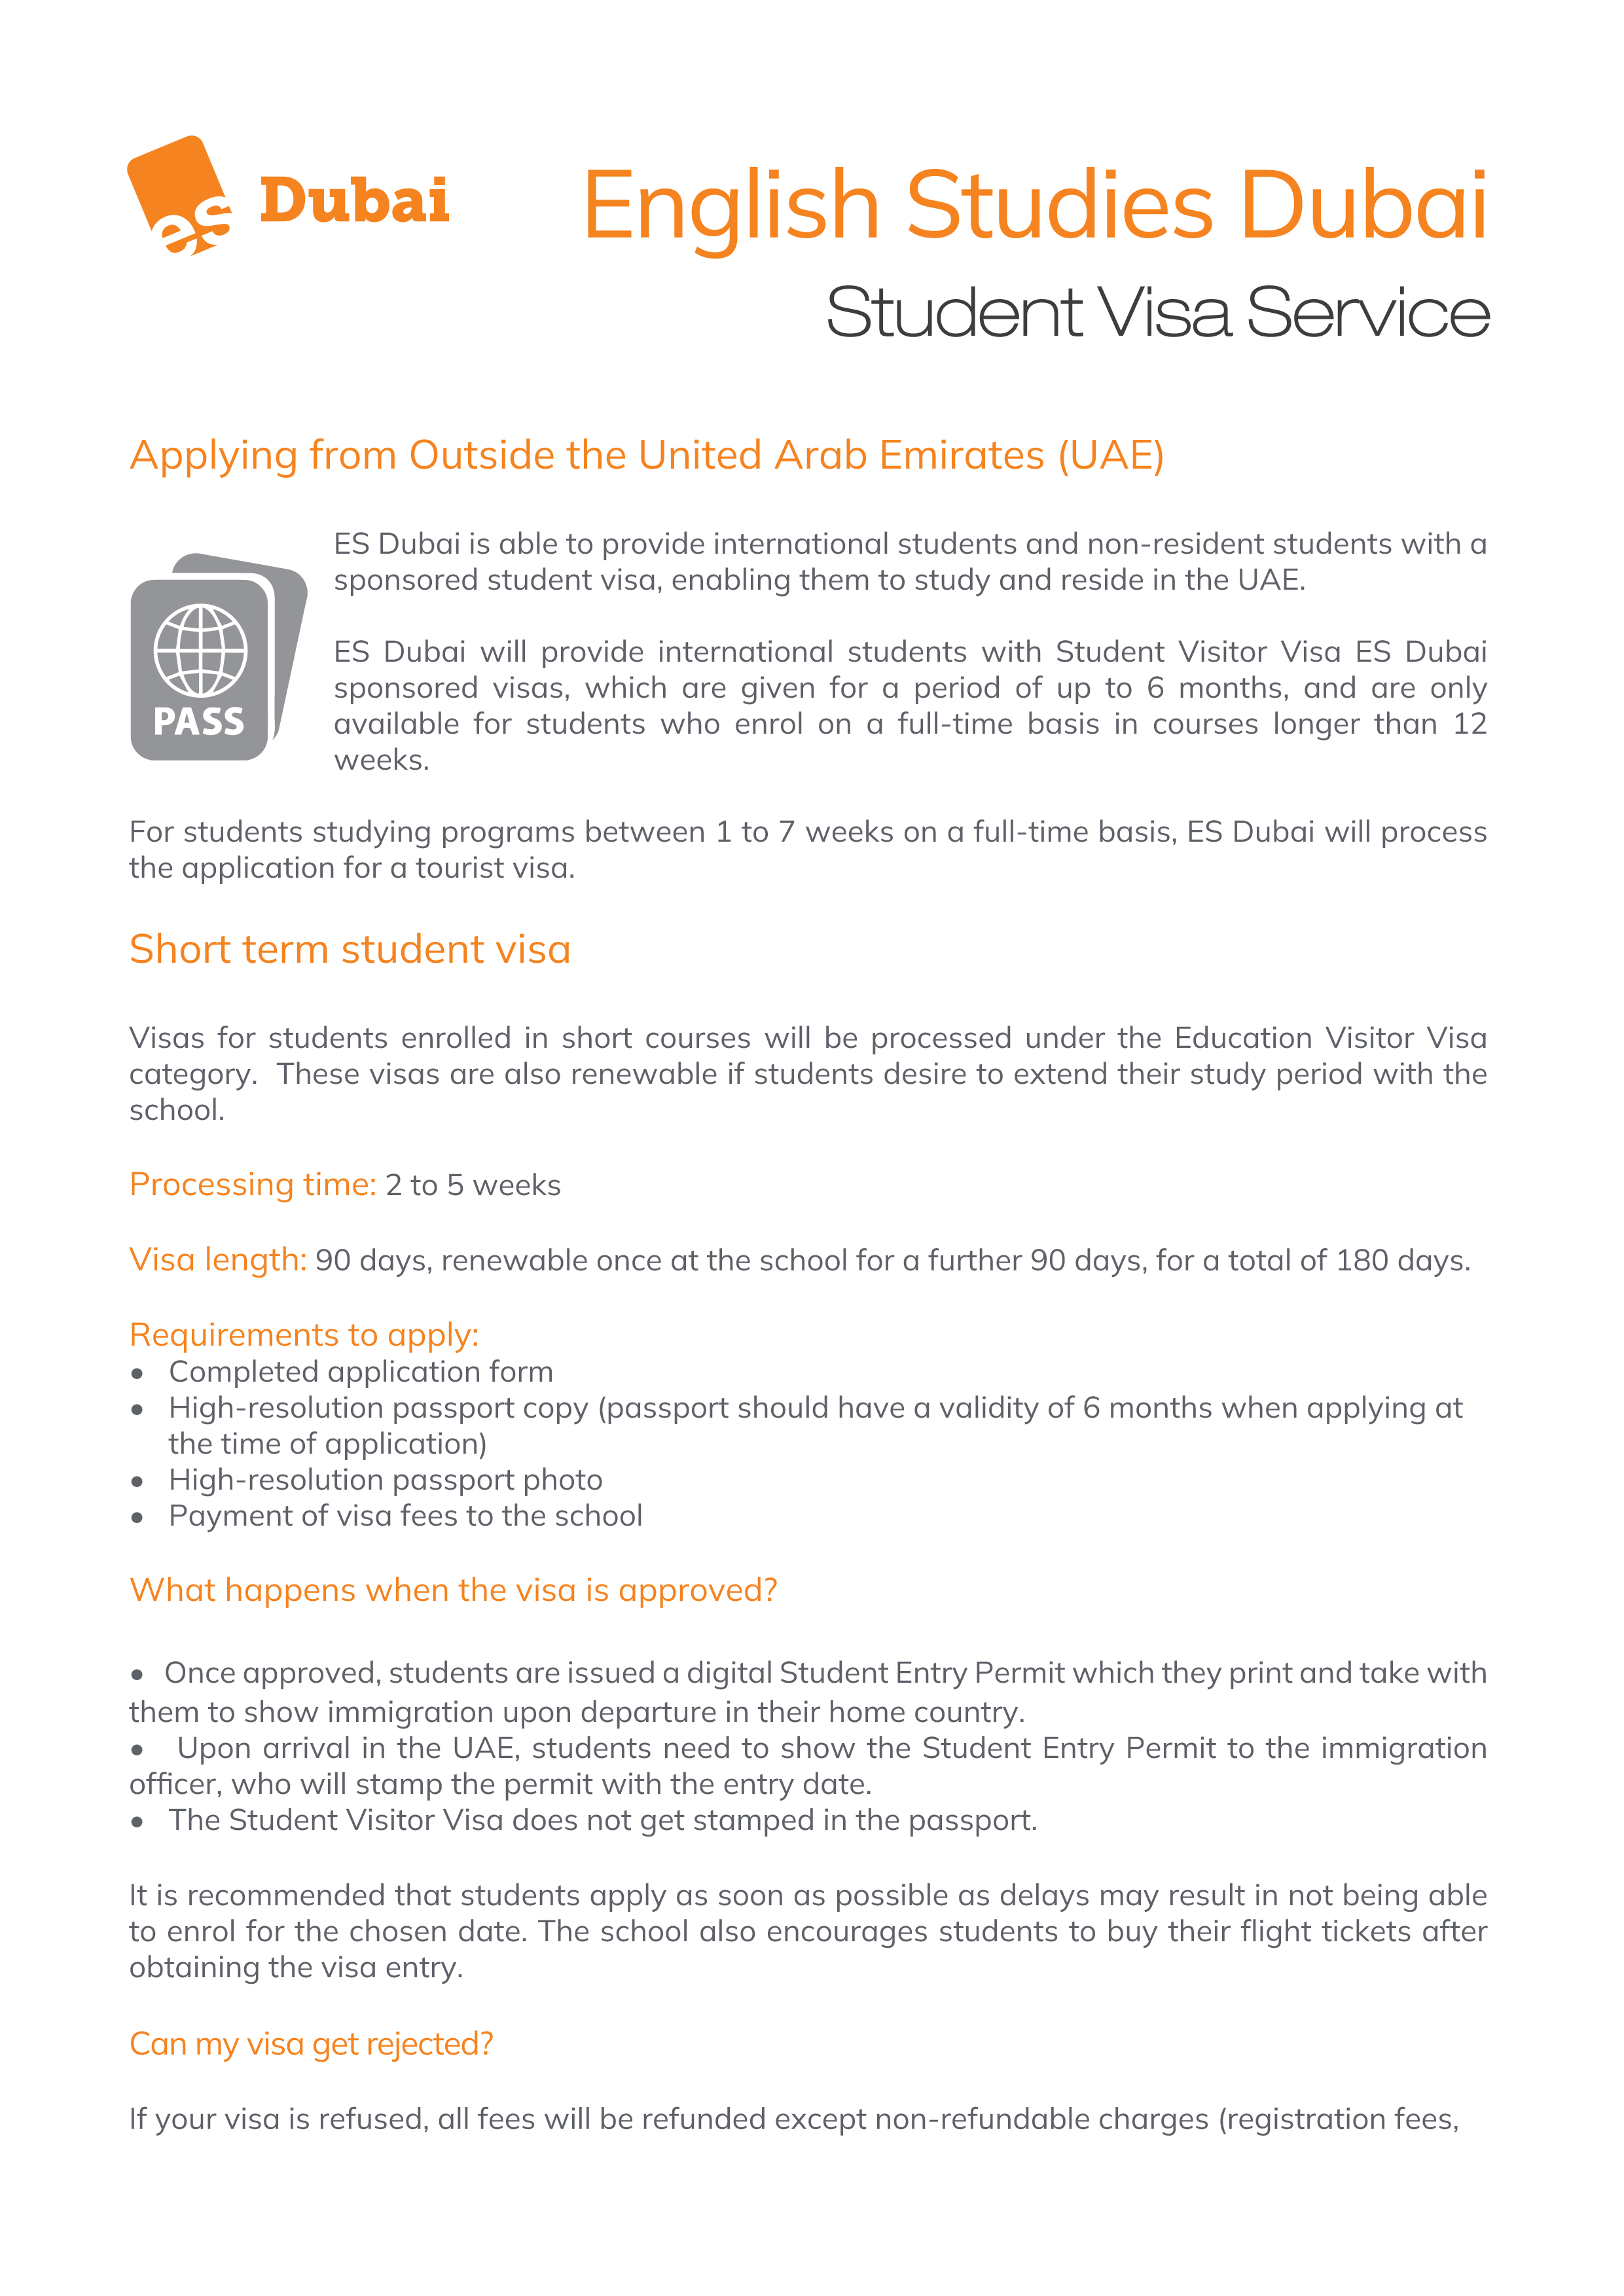 ES Dubai - Student visa Service